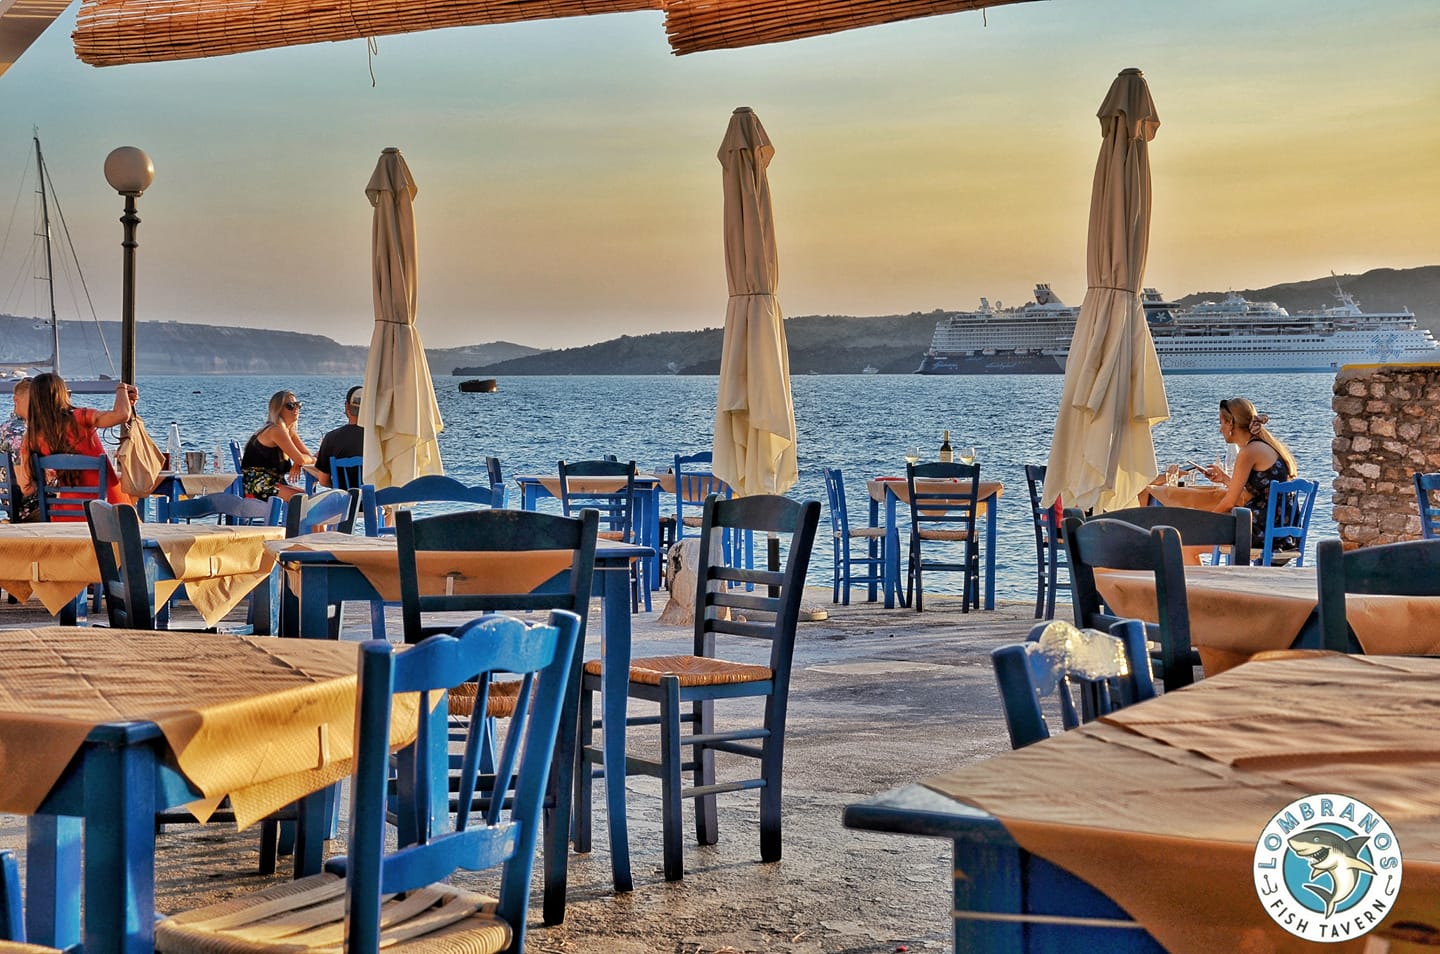 Lombranos patio, one of the best restaurants in Santorini